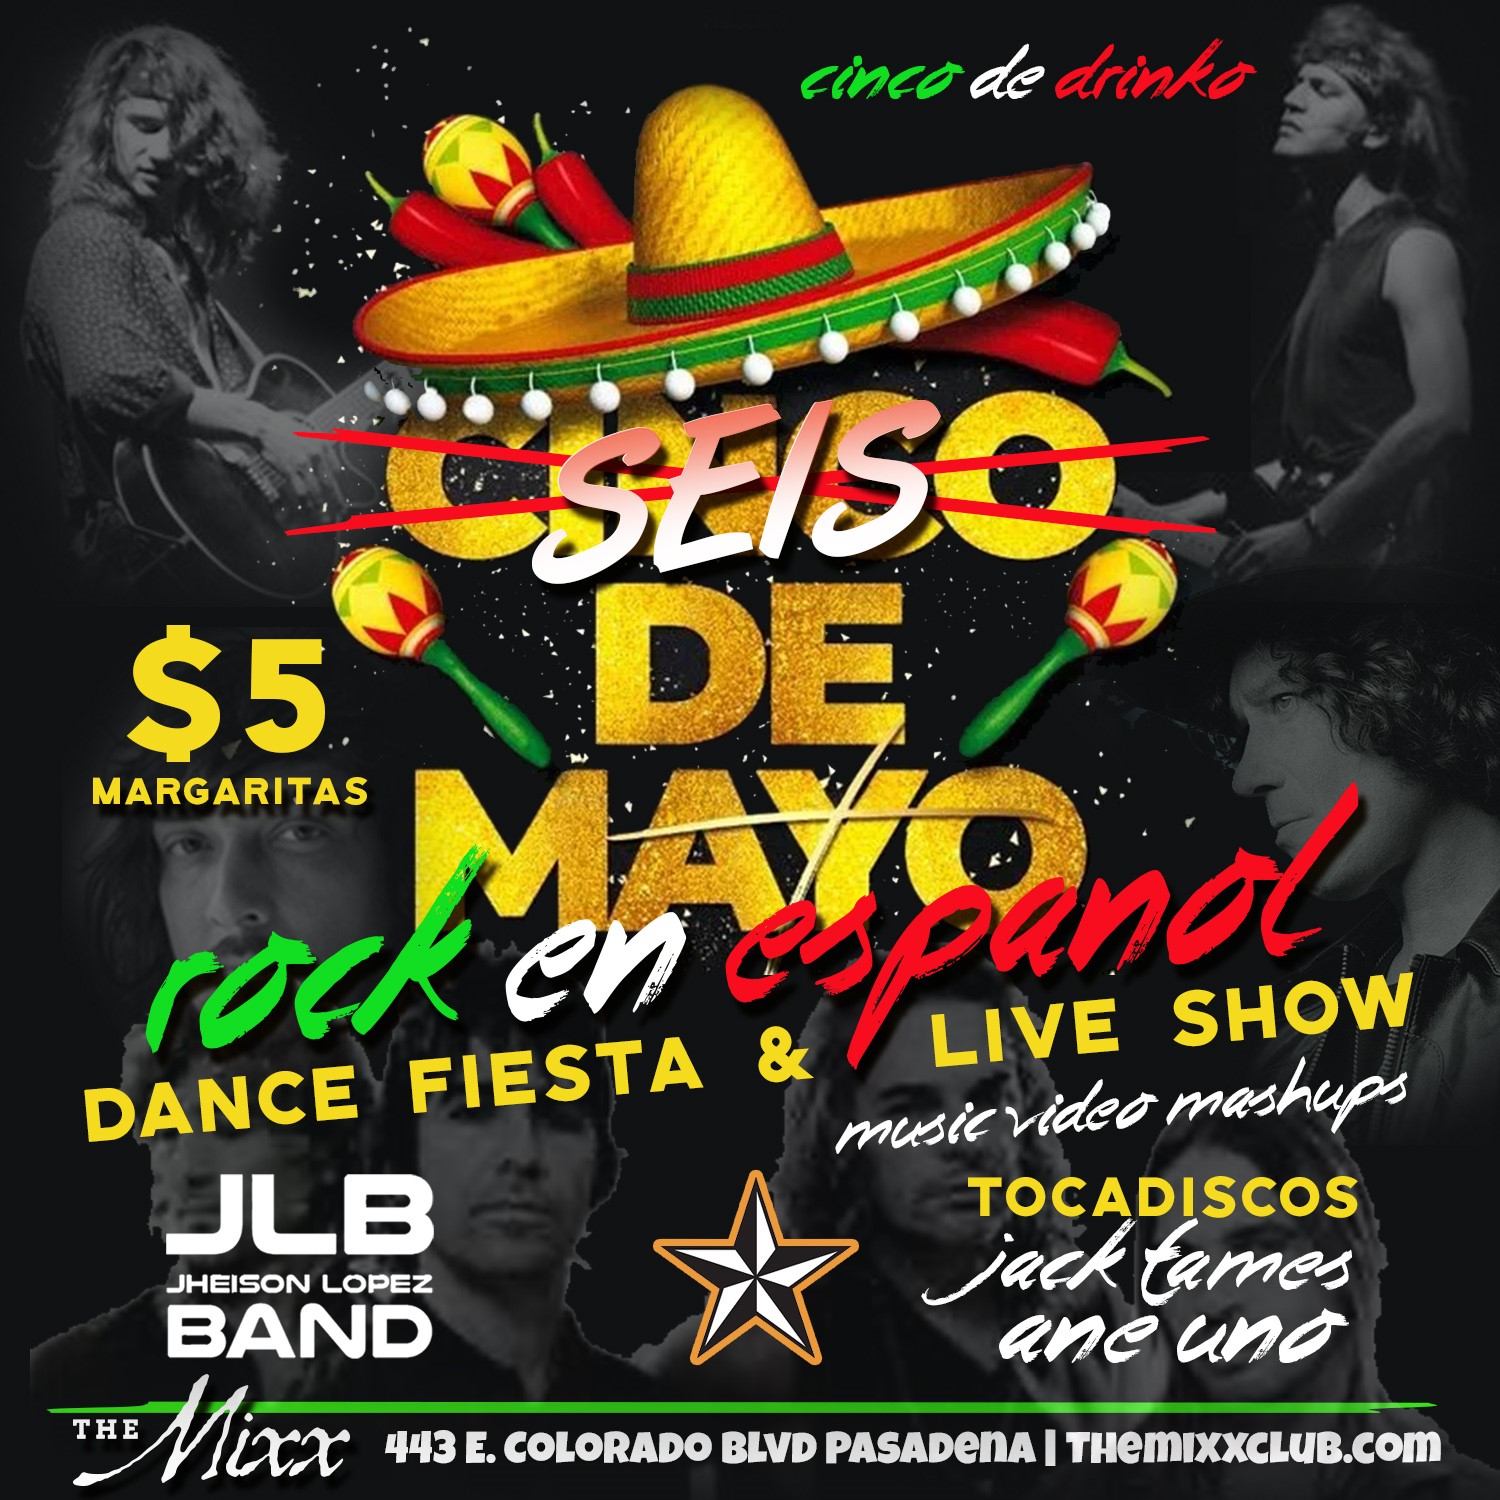 You are currently viewing Cinco De Drinko Weekend Live Rock En Español Show & Dance Fiesta